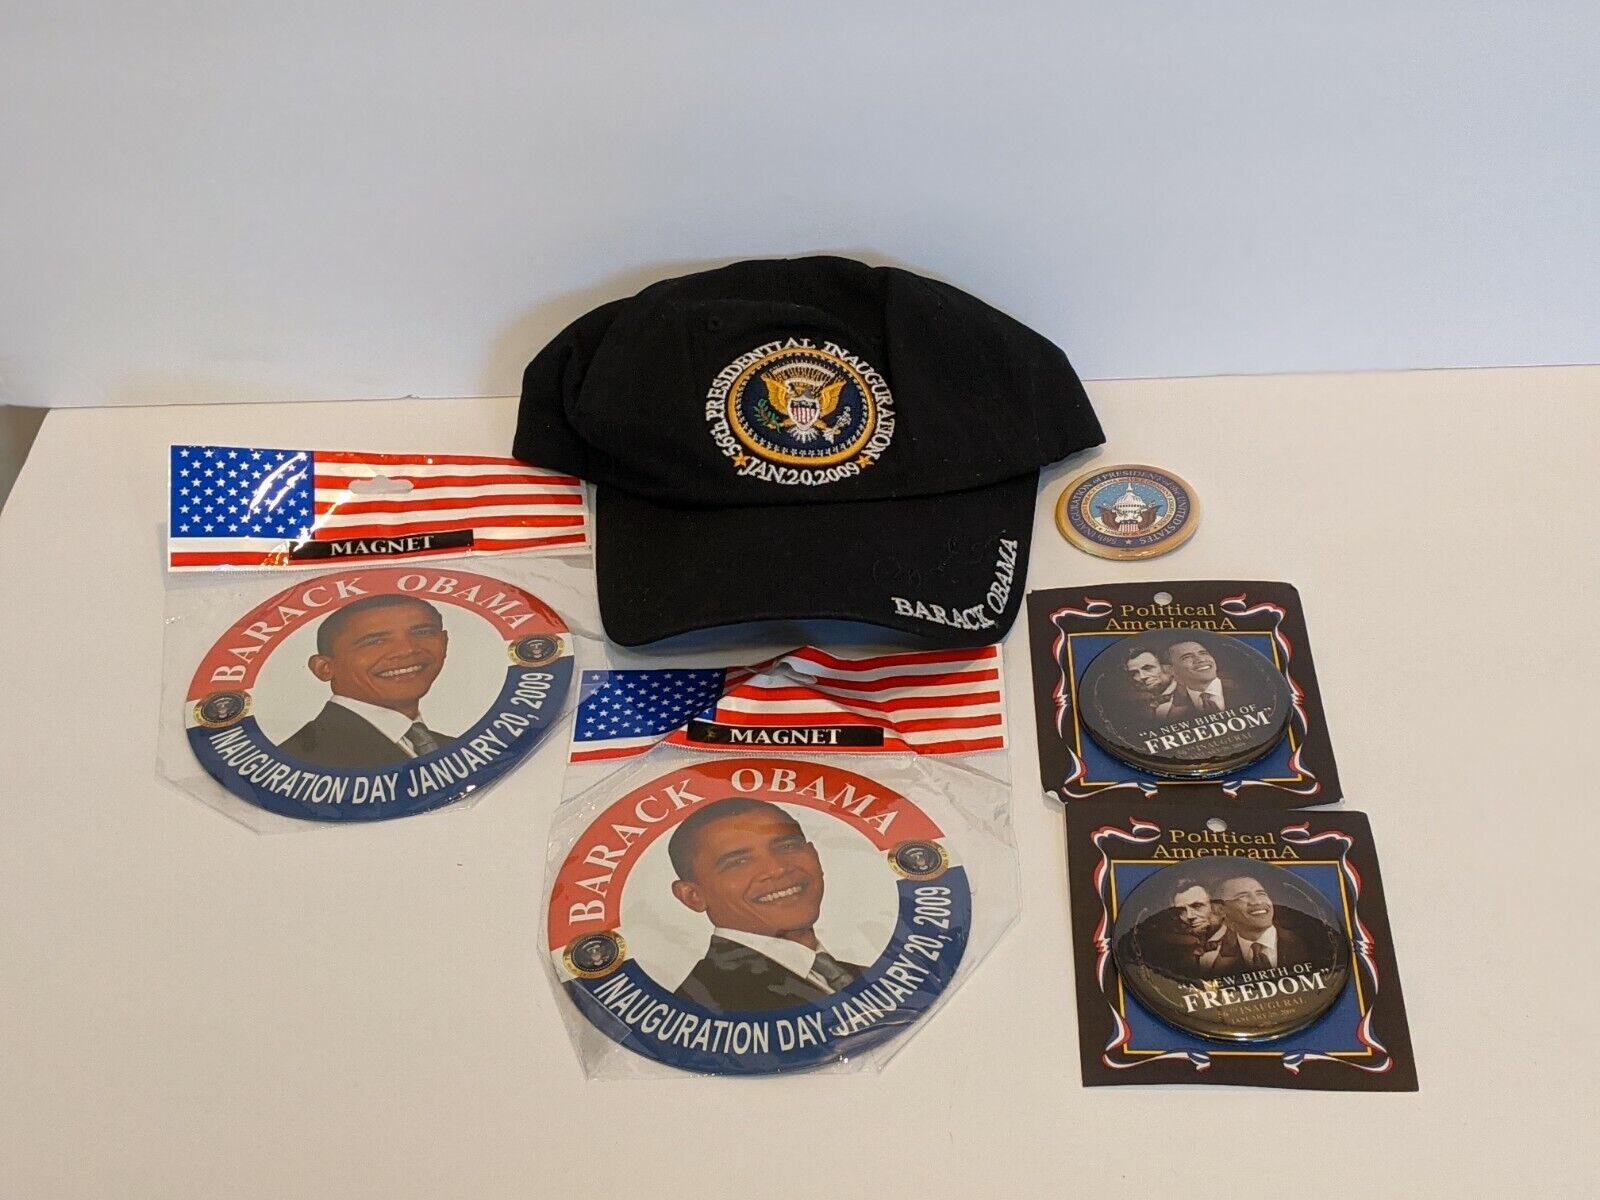 President Barrack Obama January 20, 2009 Presidential Innauguration memorabilia